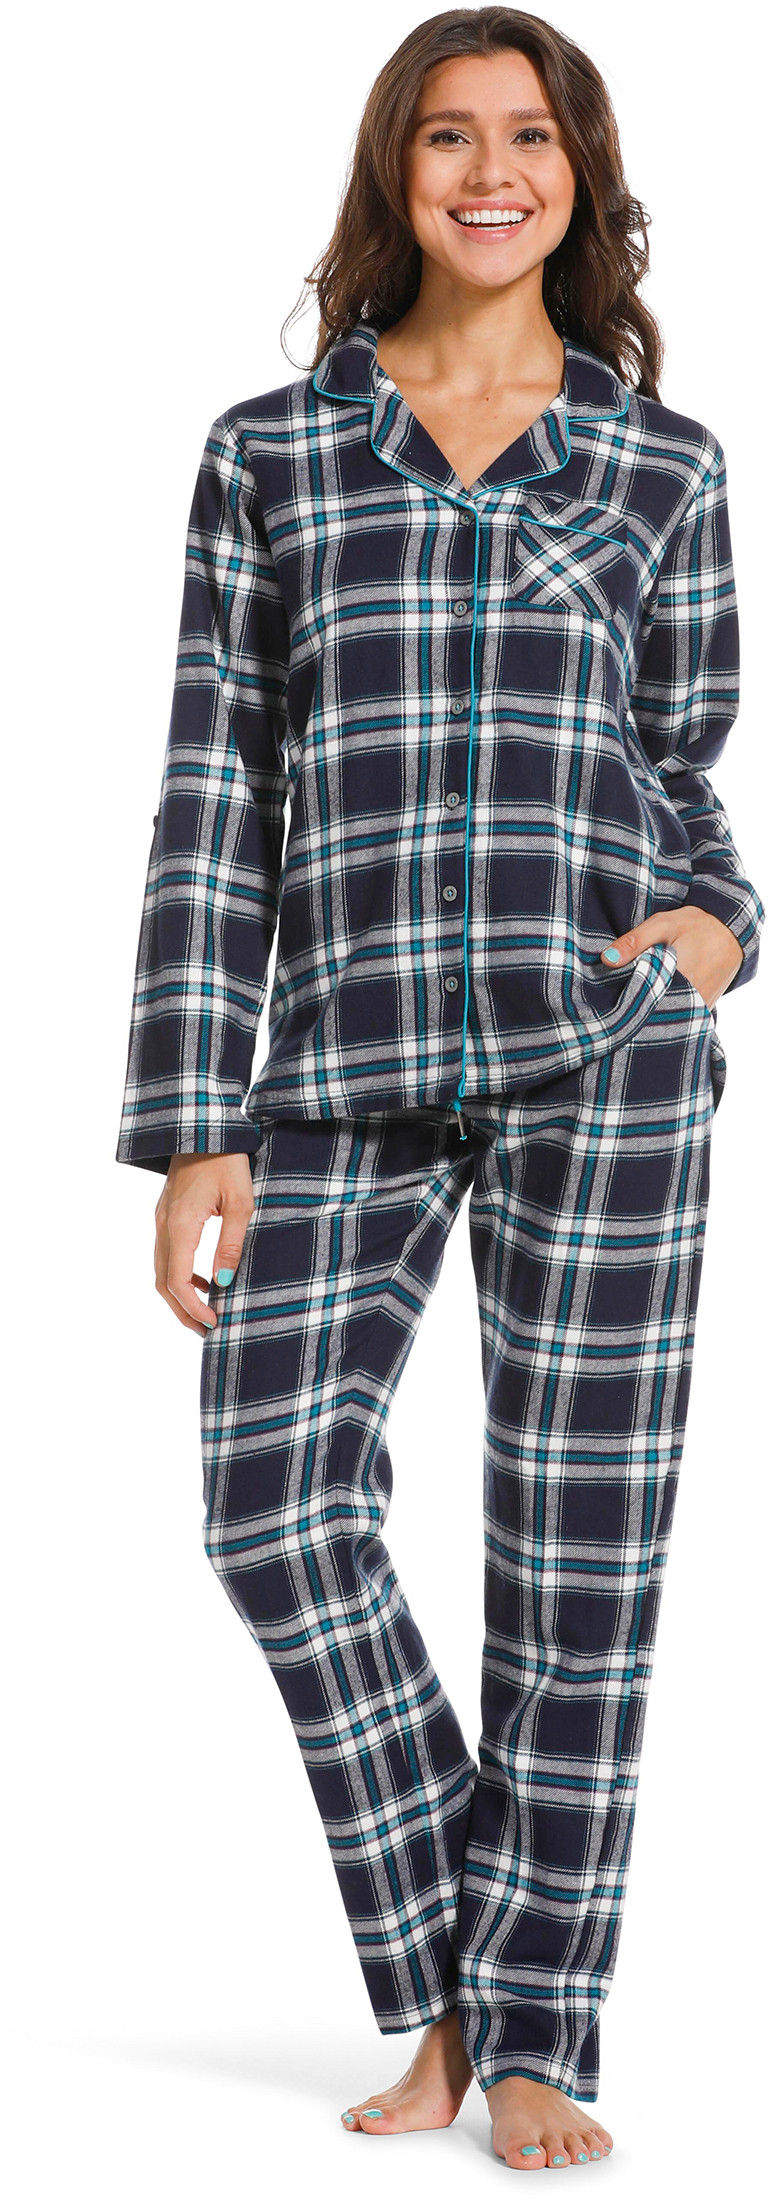 Rebelle dames pyjama flanel 21222-408-6-40